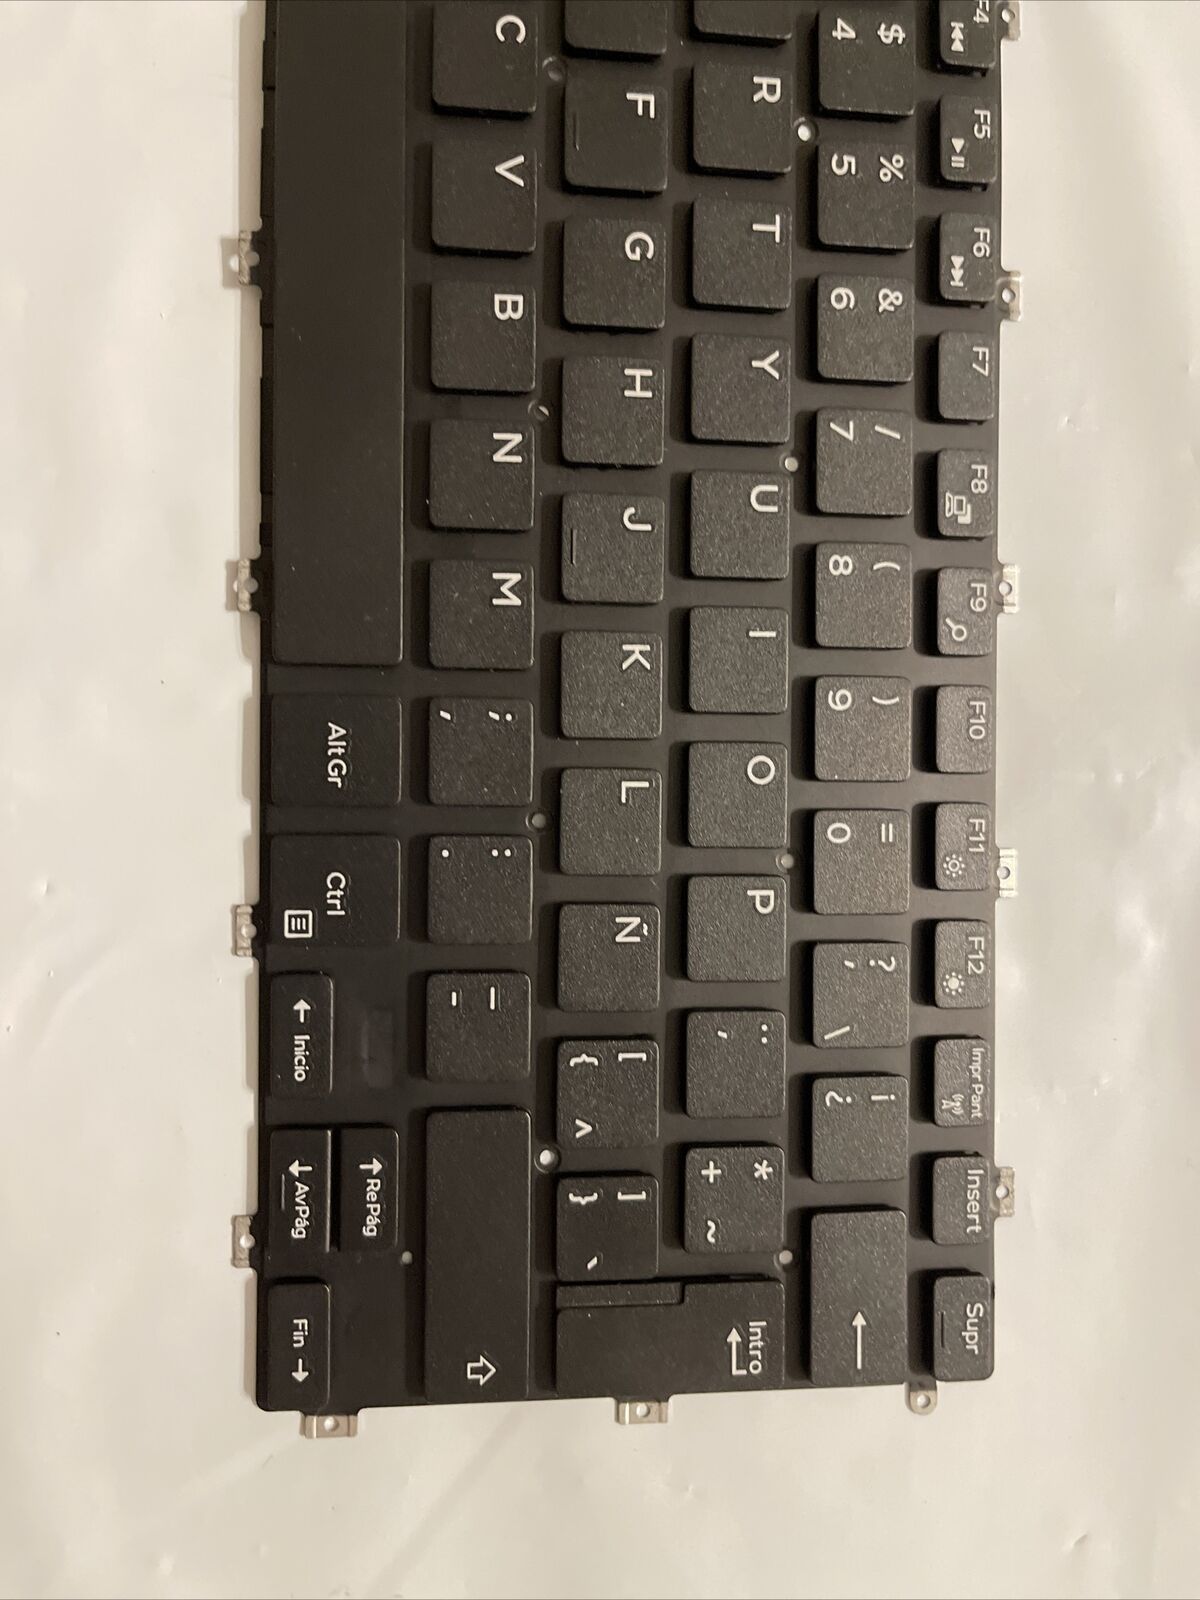 OEM Dell Inspiron 15 5580 Non-Backlit Laptop Keyboard SPANISH 9X65Y 09X65Y Grd A